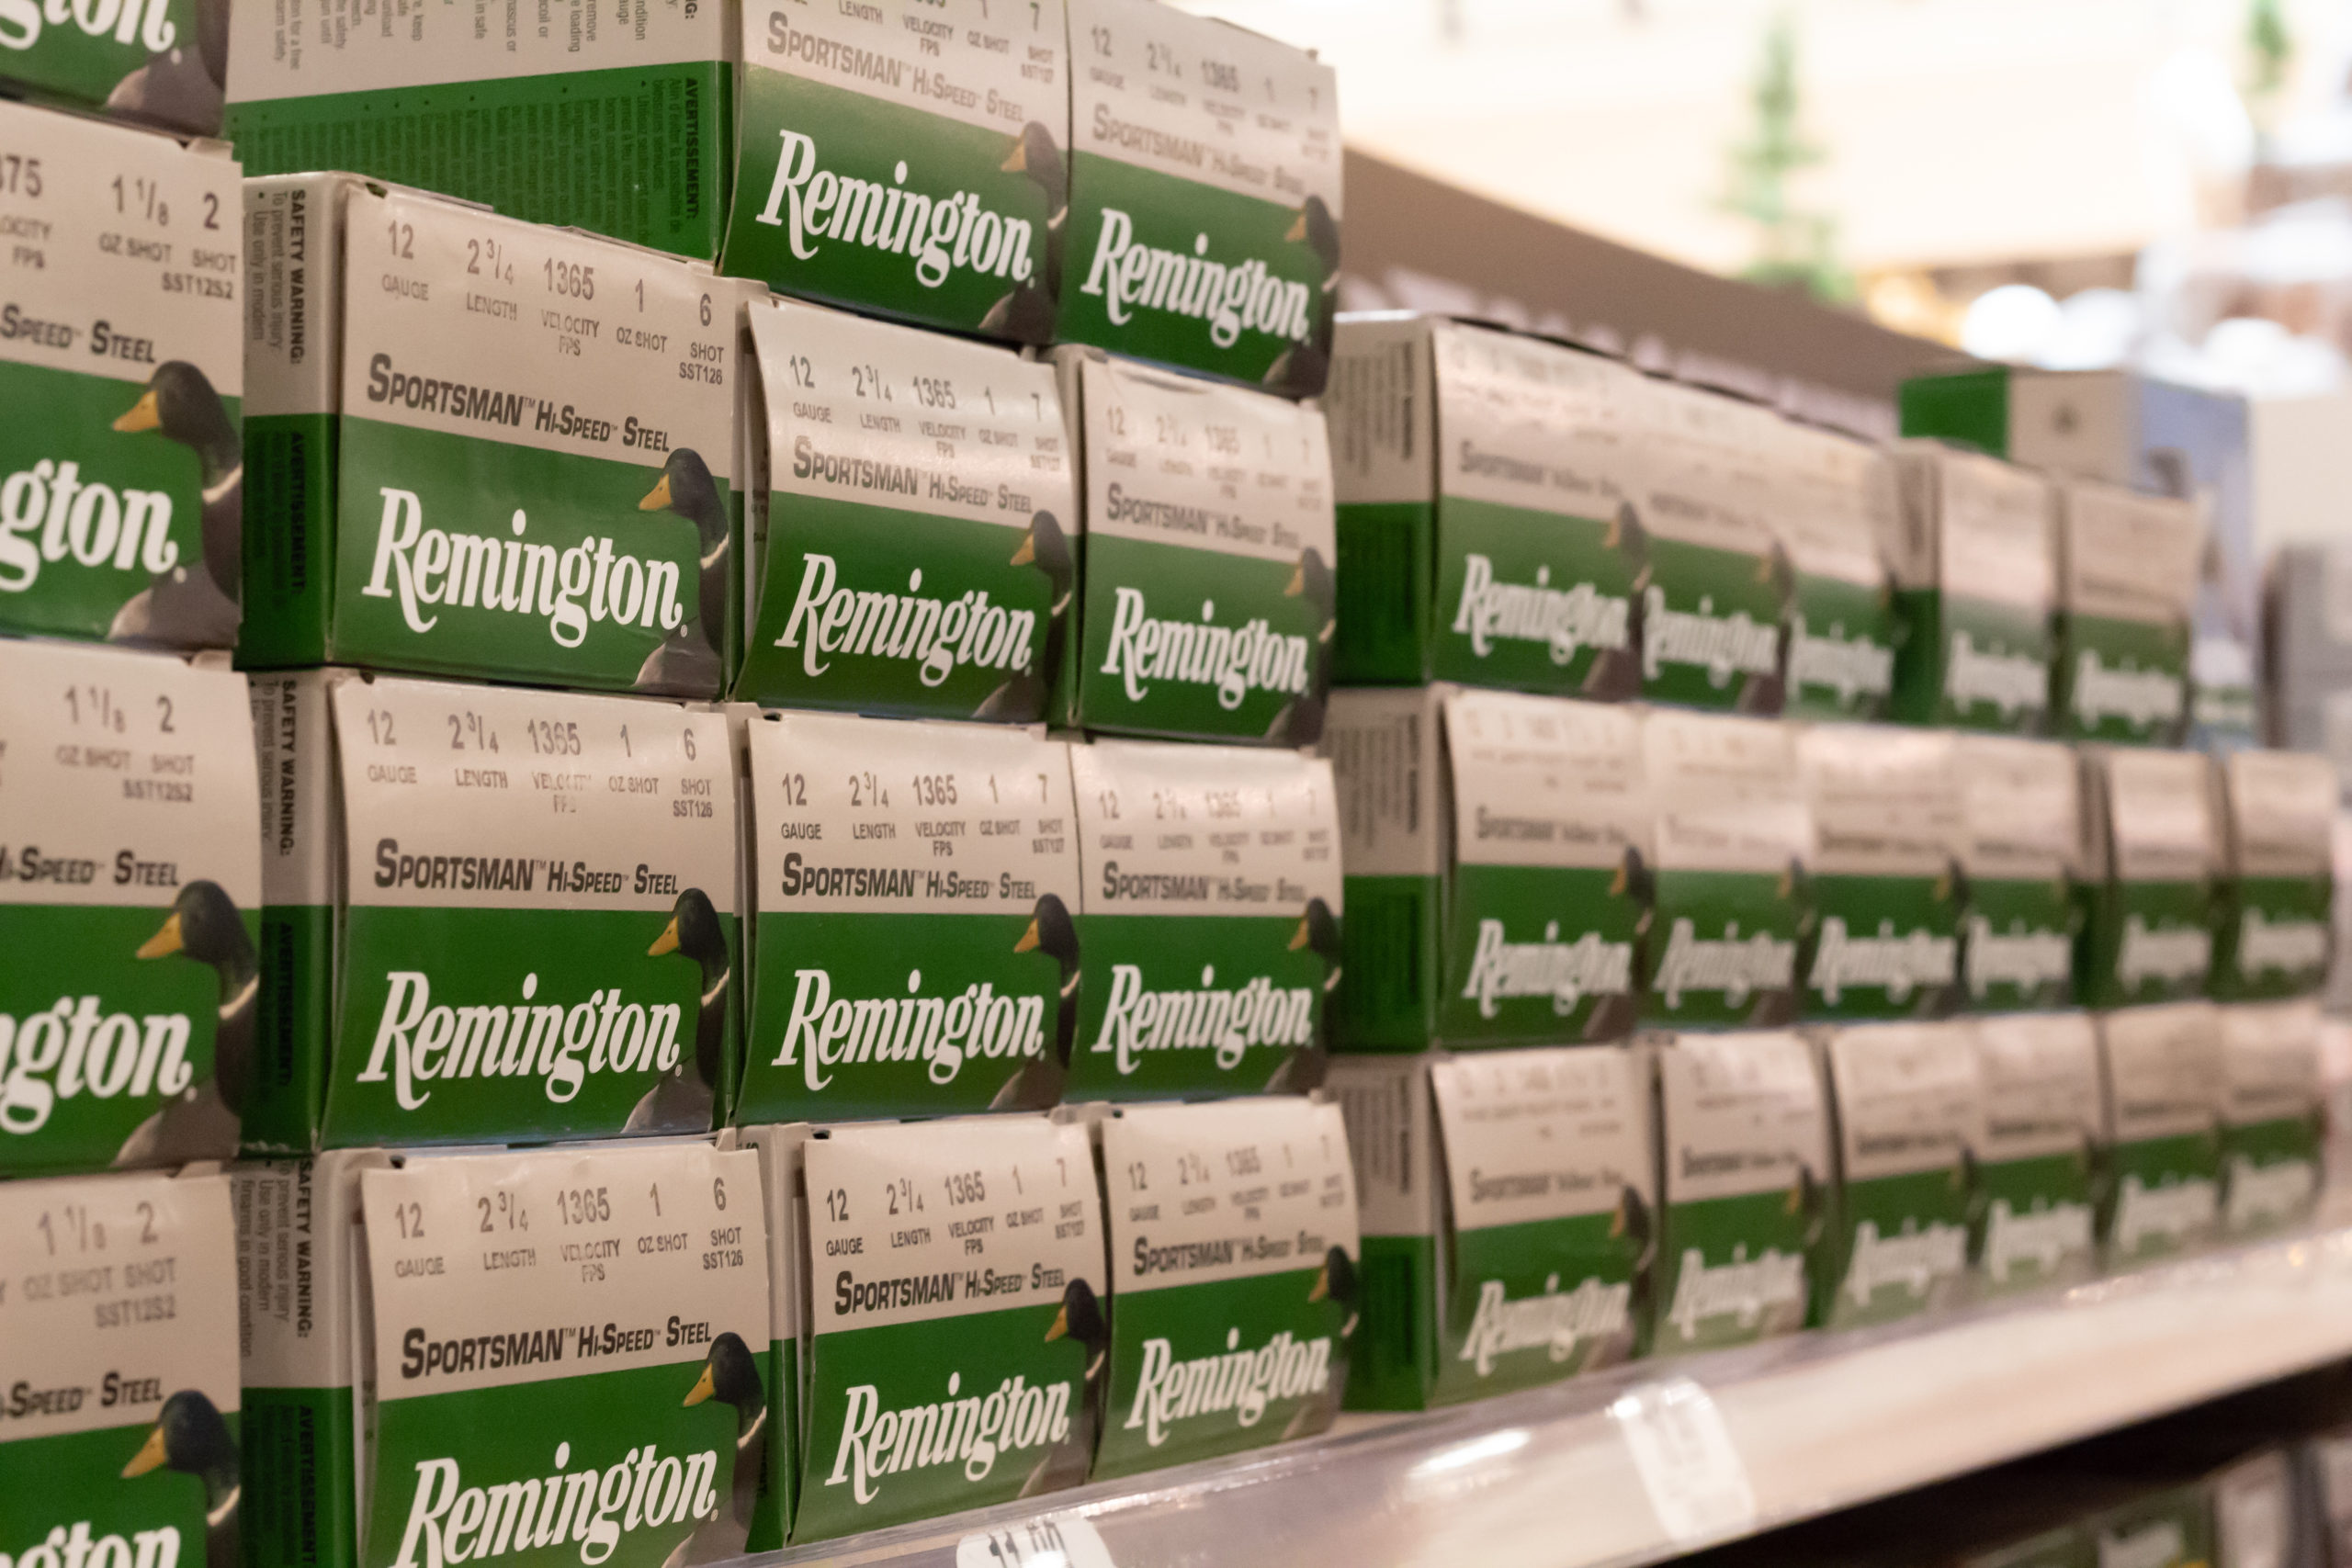 Remington shotgun shells [Shutterstock/Laurie A. Smith]